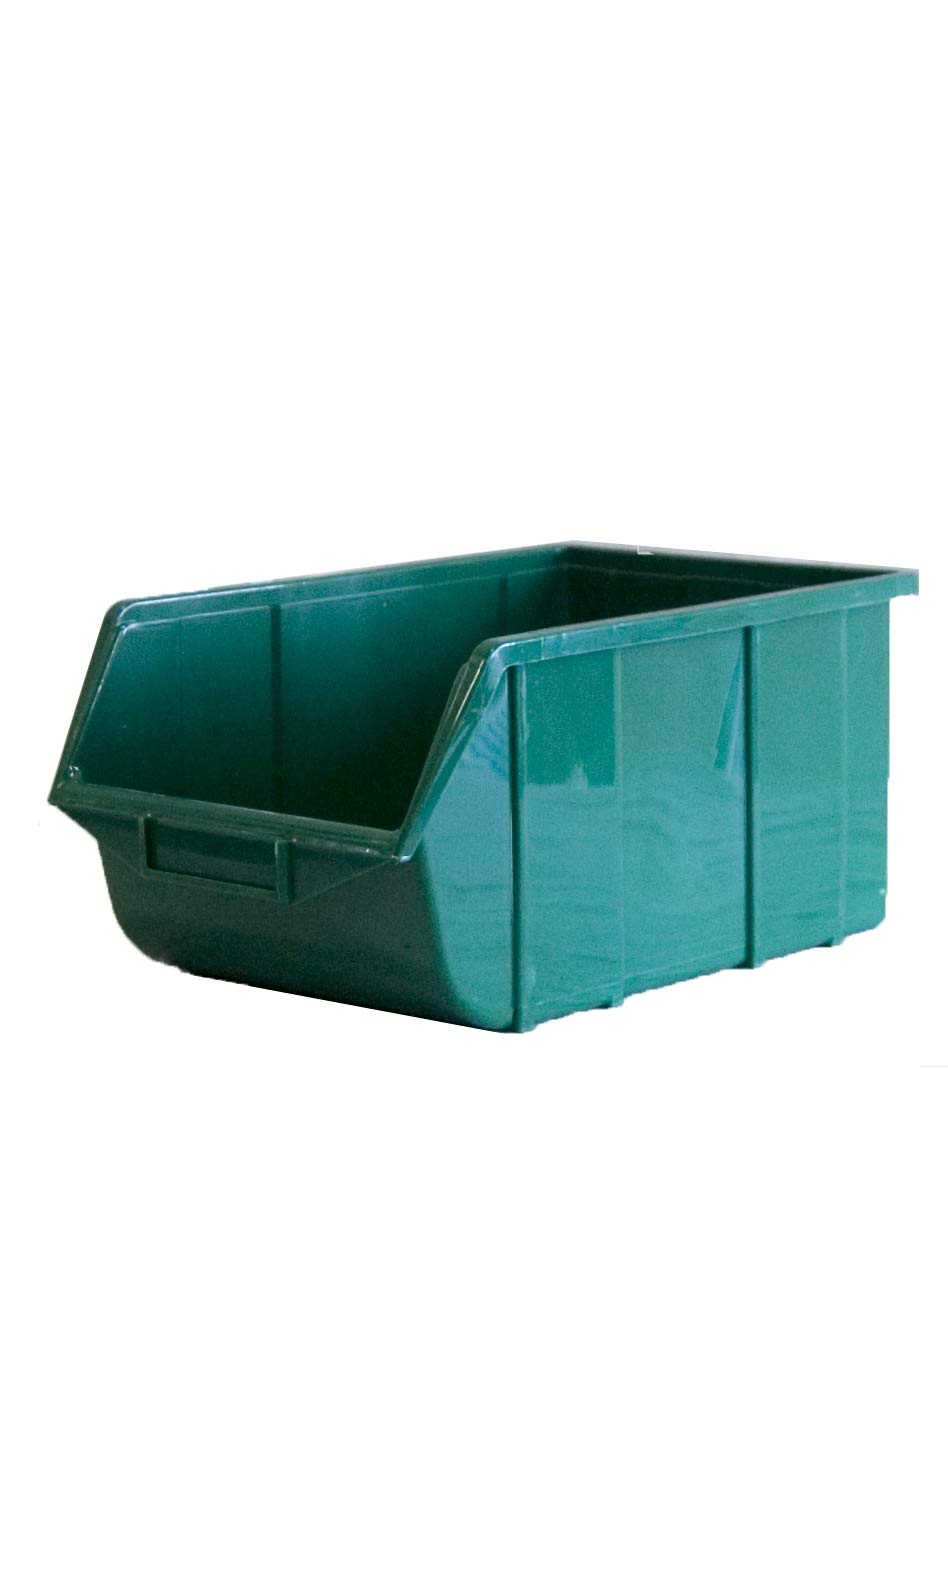 Vaschetta EcoBox 114 - 22x35,5x16,7 cm - verde - Terry